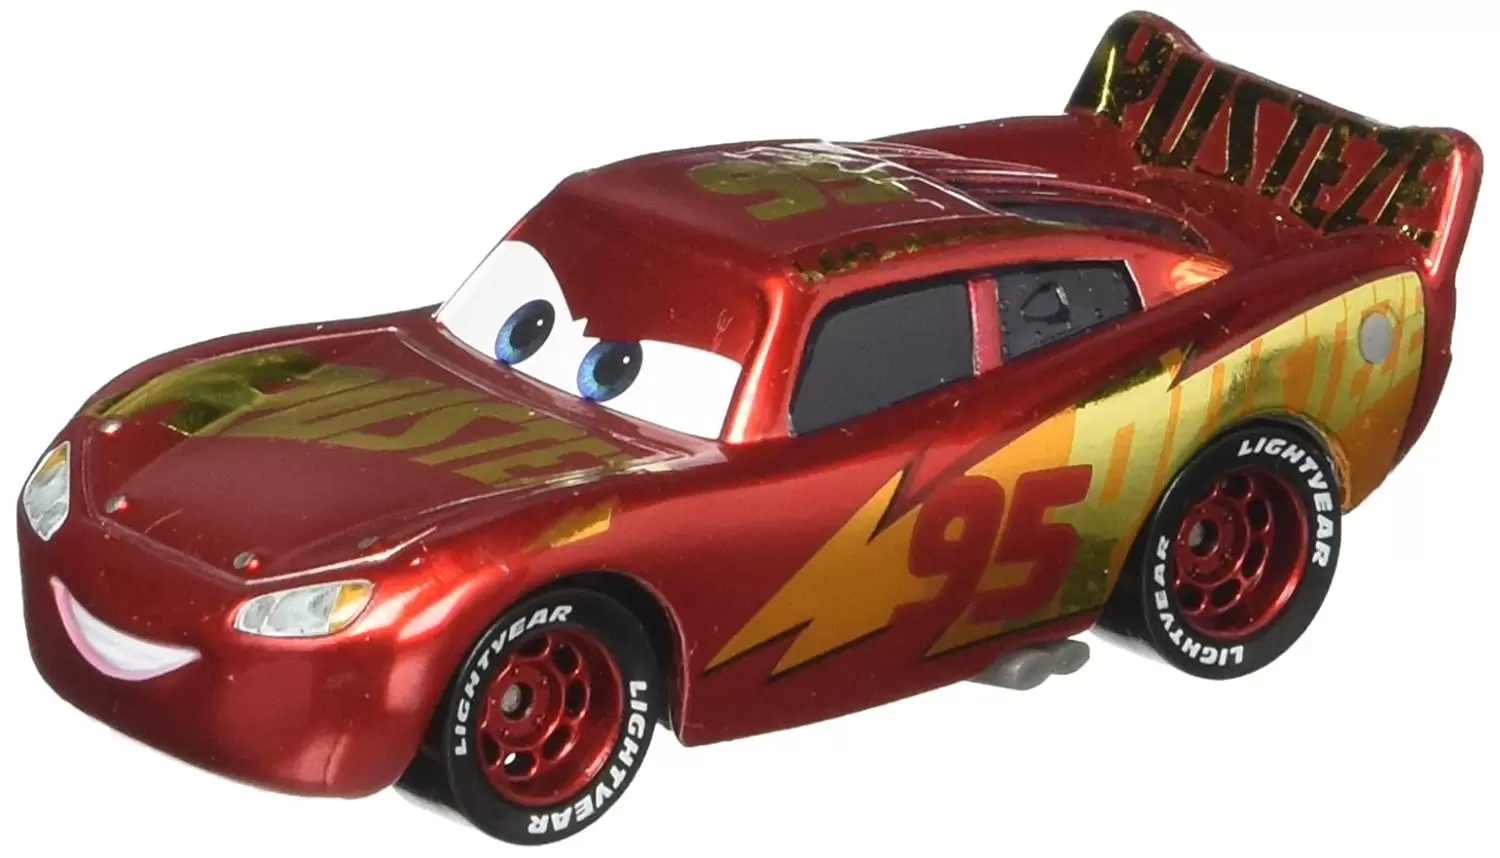 Cars 3 models - Rust-Eze Racing Center Lightning McQueen